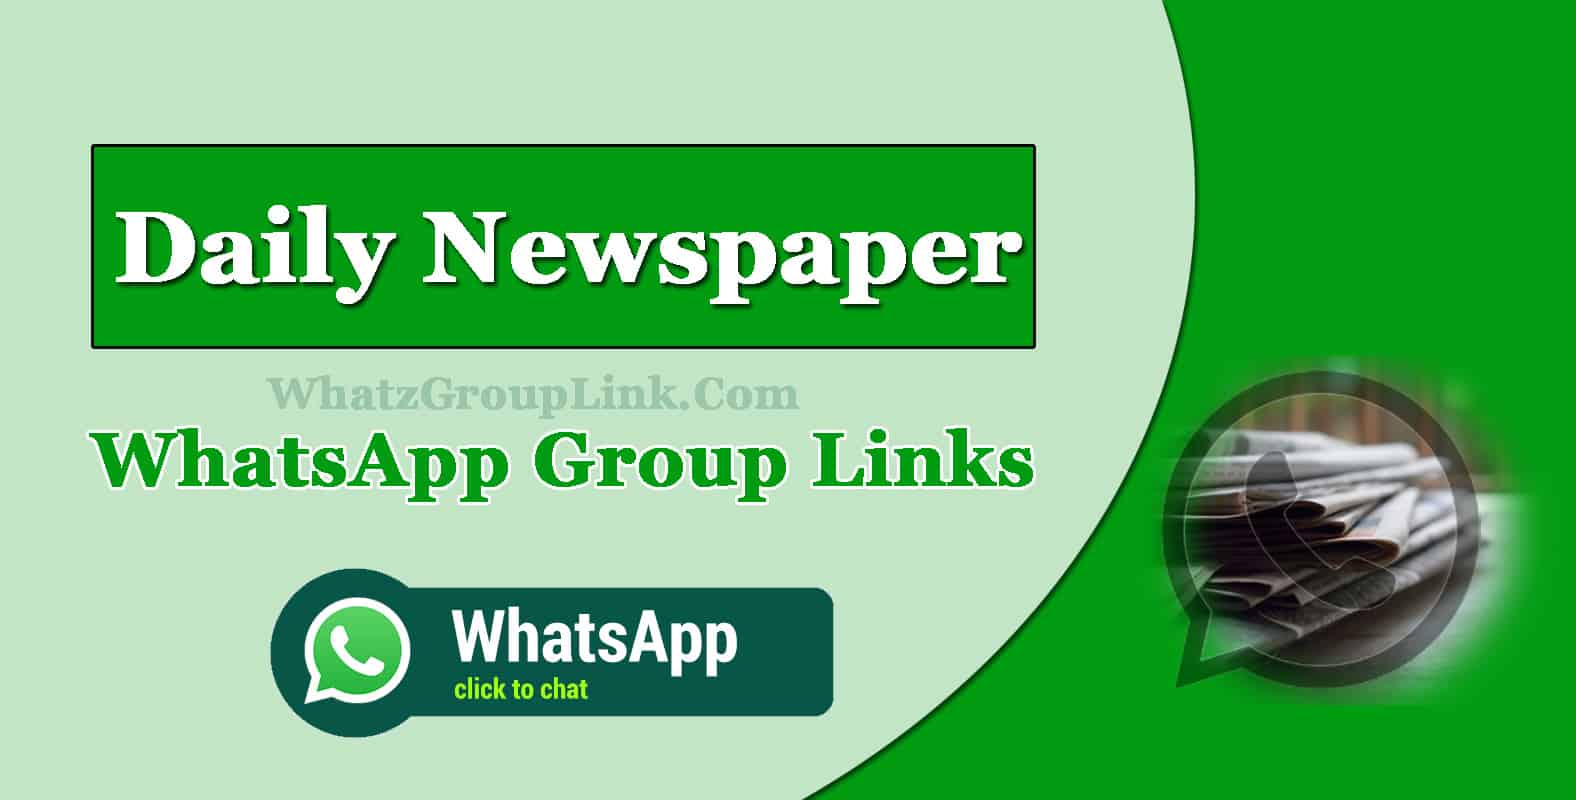 Daily Newspaper WhatsApp Group